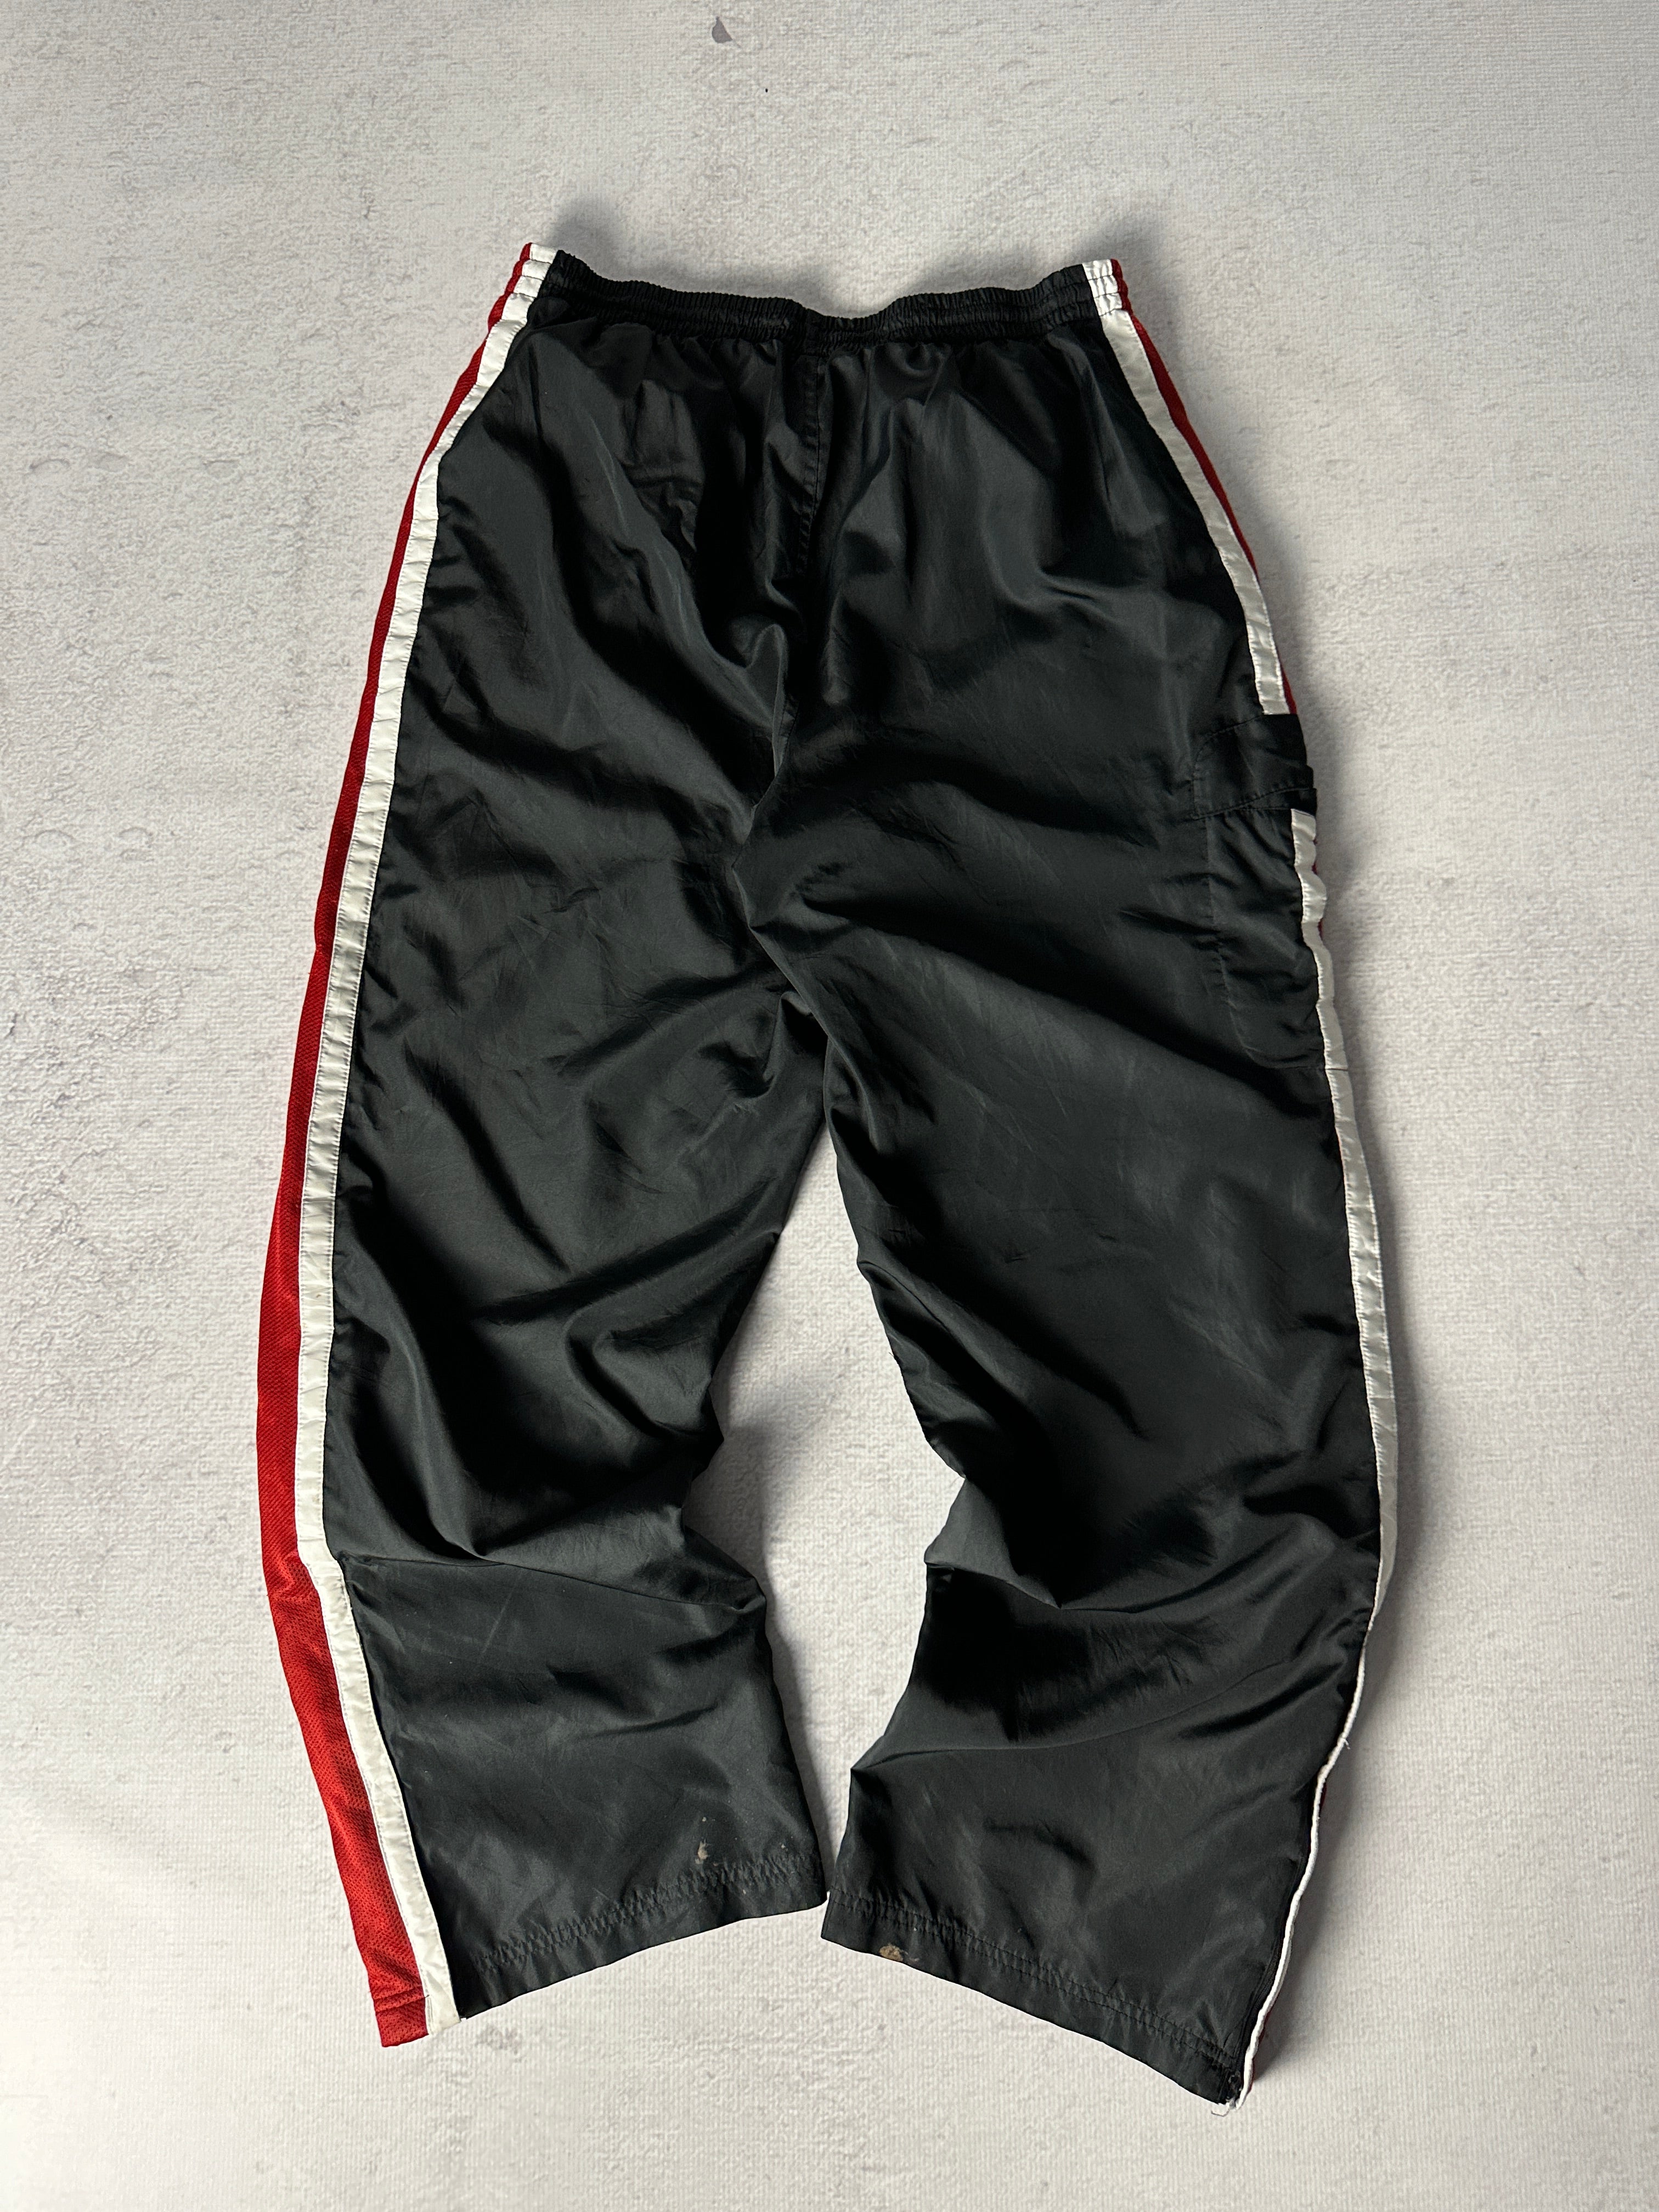 Vintage Reebok Track Pants - Men's XL